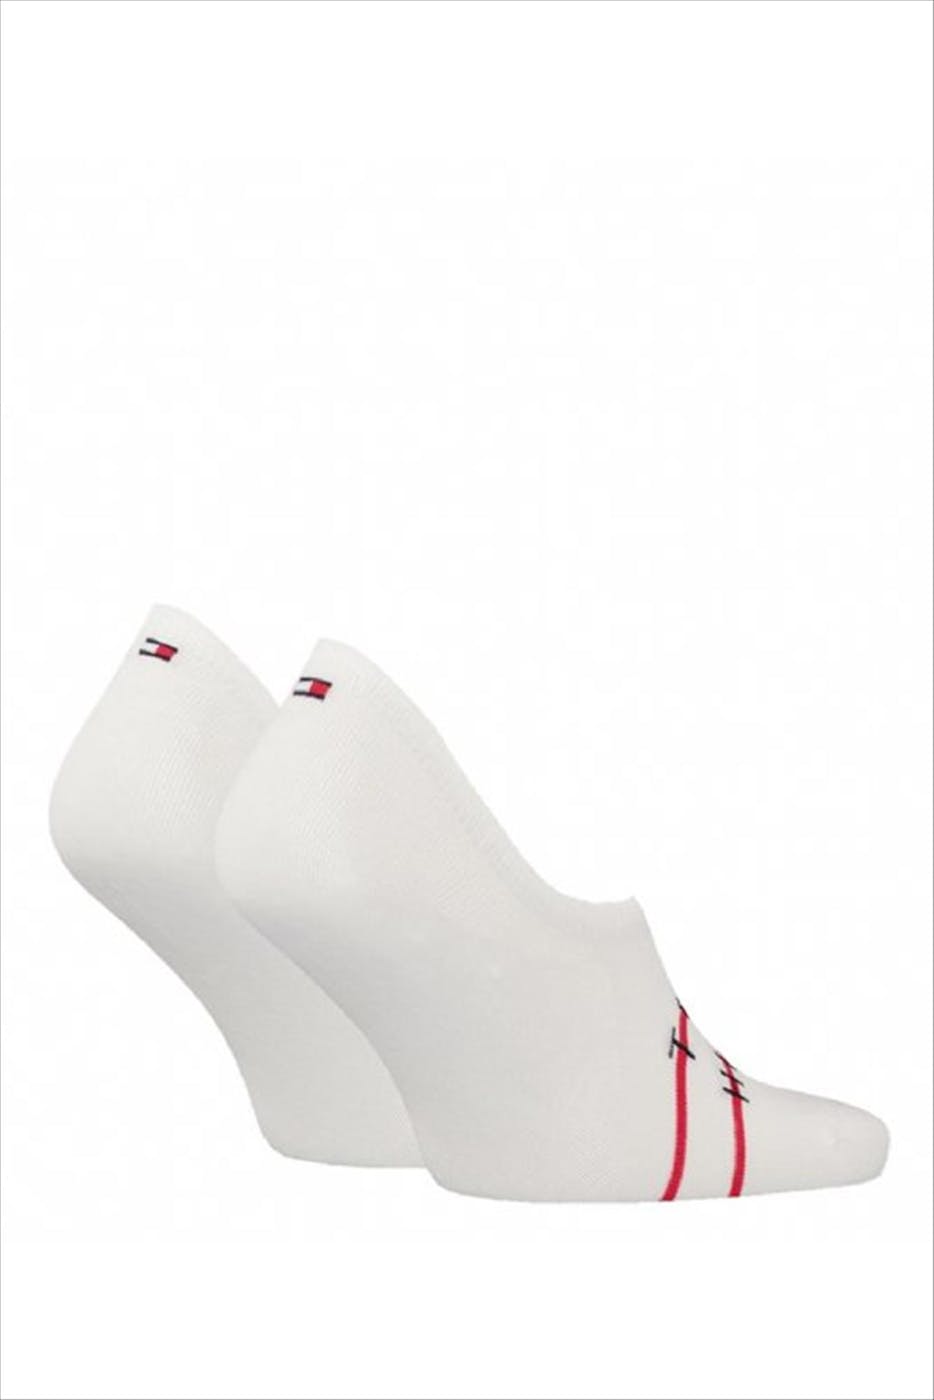 Hilfiger socks - Witte Red Line 2-pack sokken, maat: 43-46